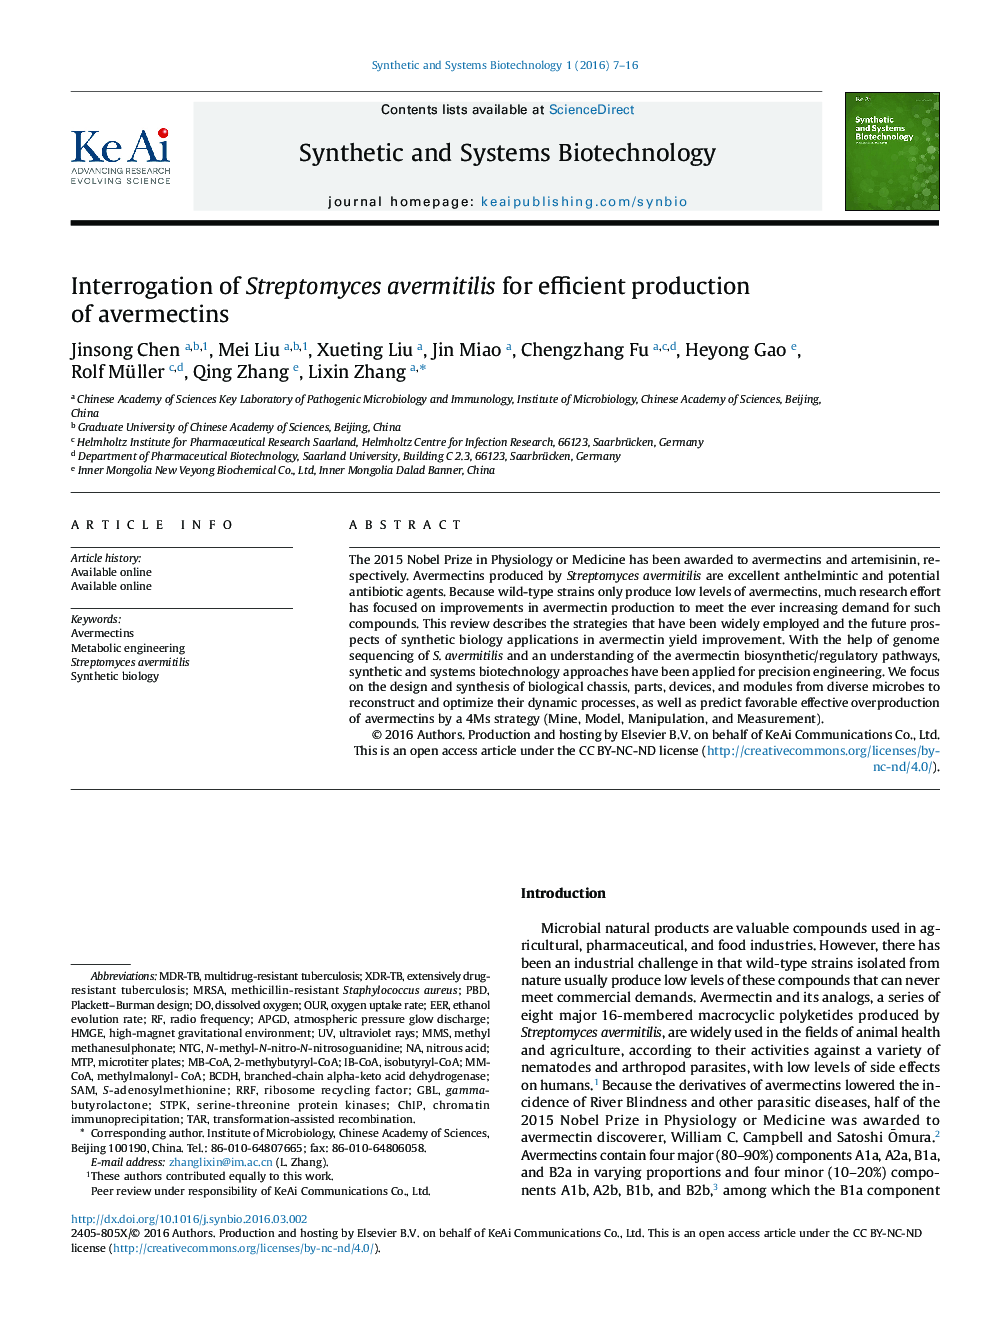 Interrogation of Streptomyces avermitilis for efficient production of avermectins 